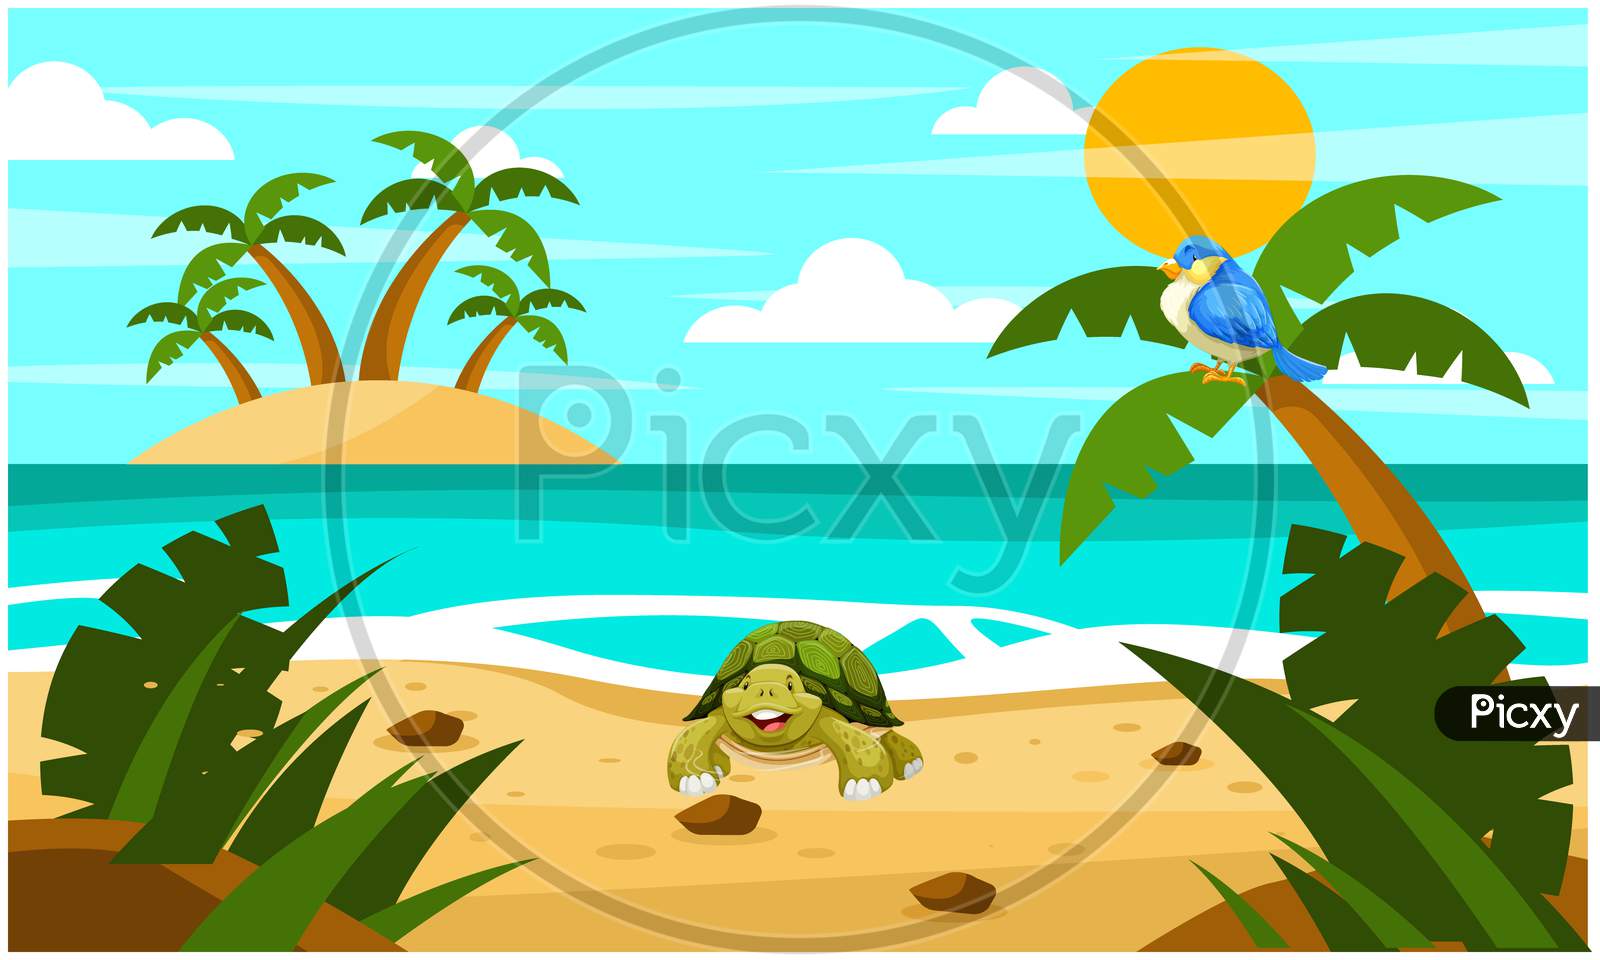 Tortoise Is Enjoying On The Beach With Birds